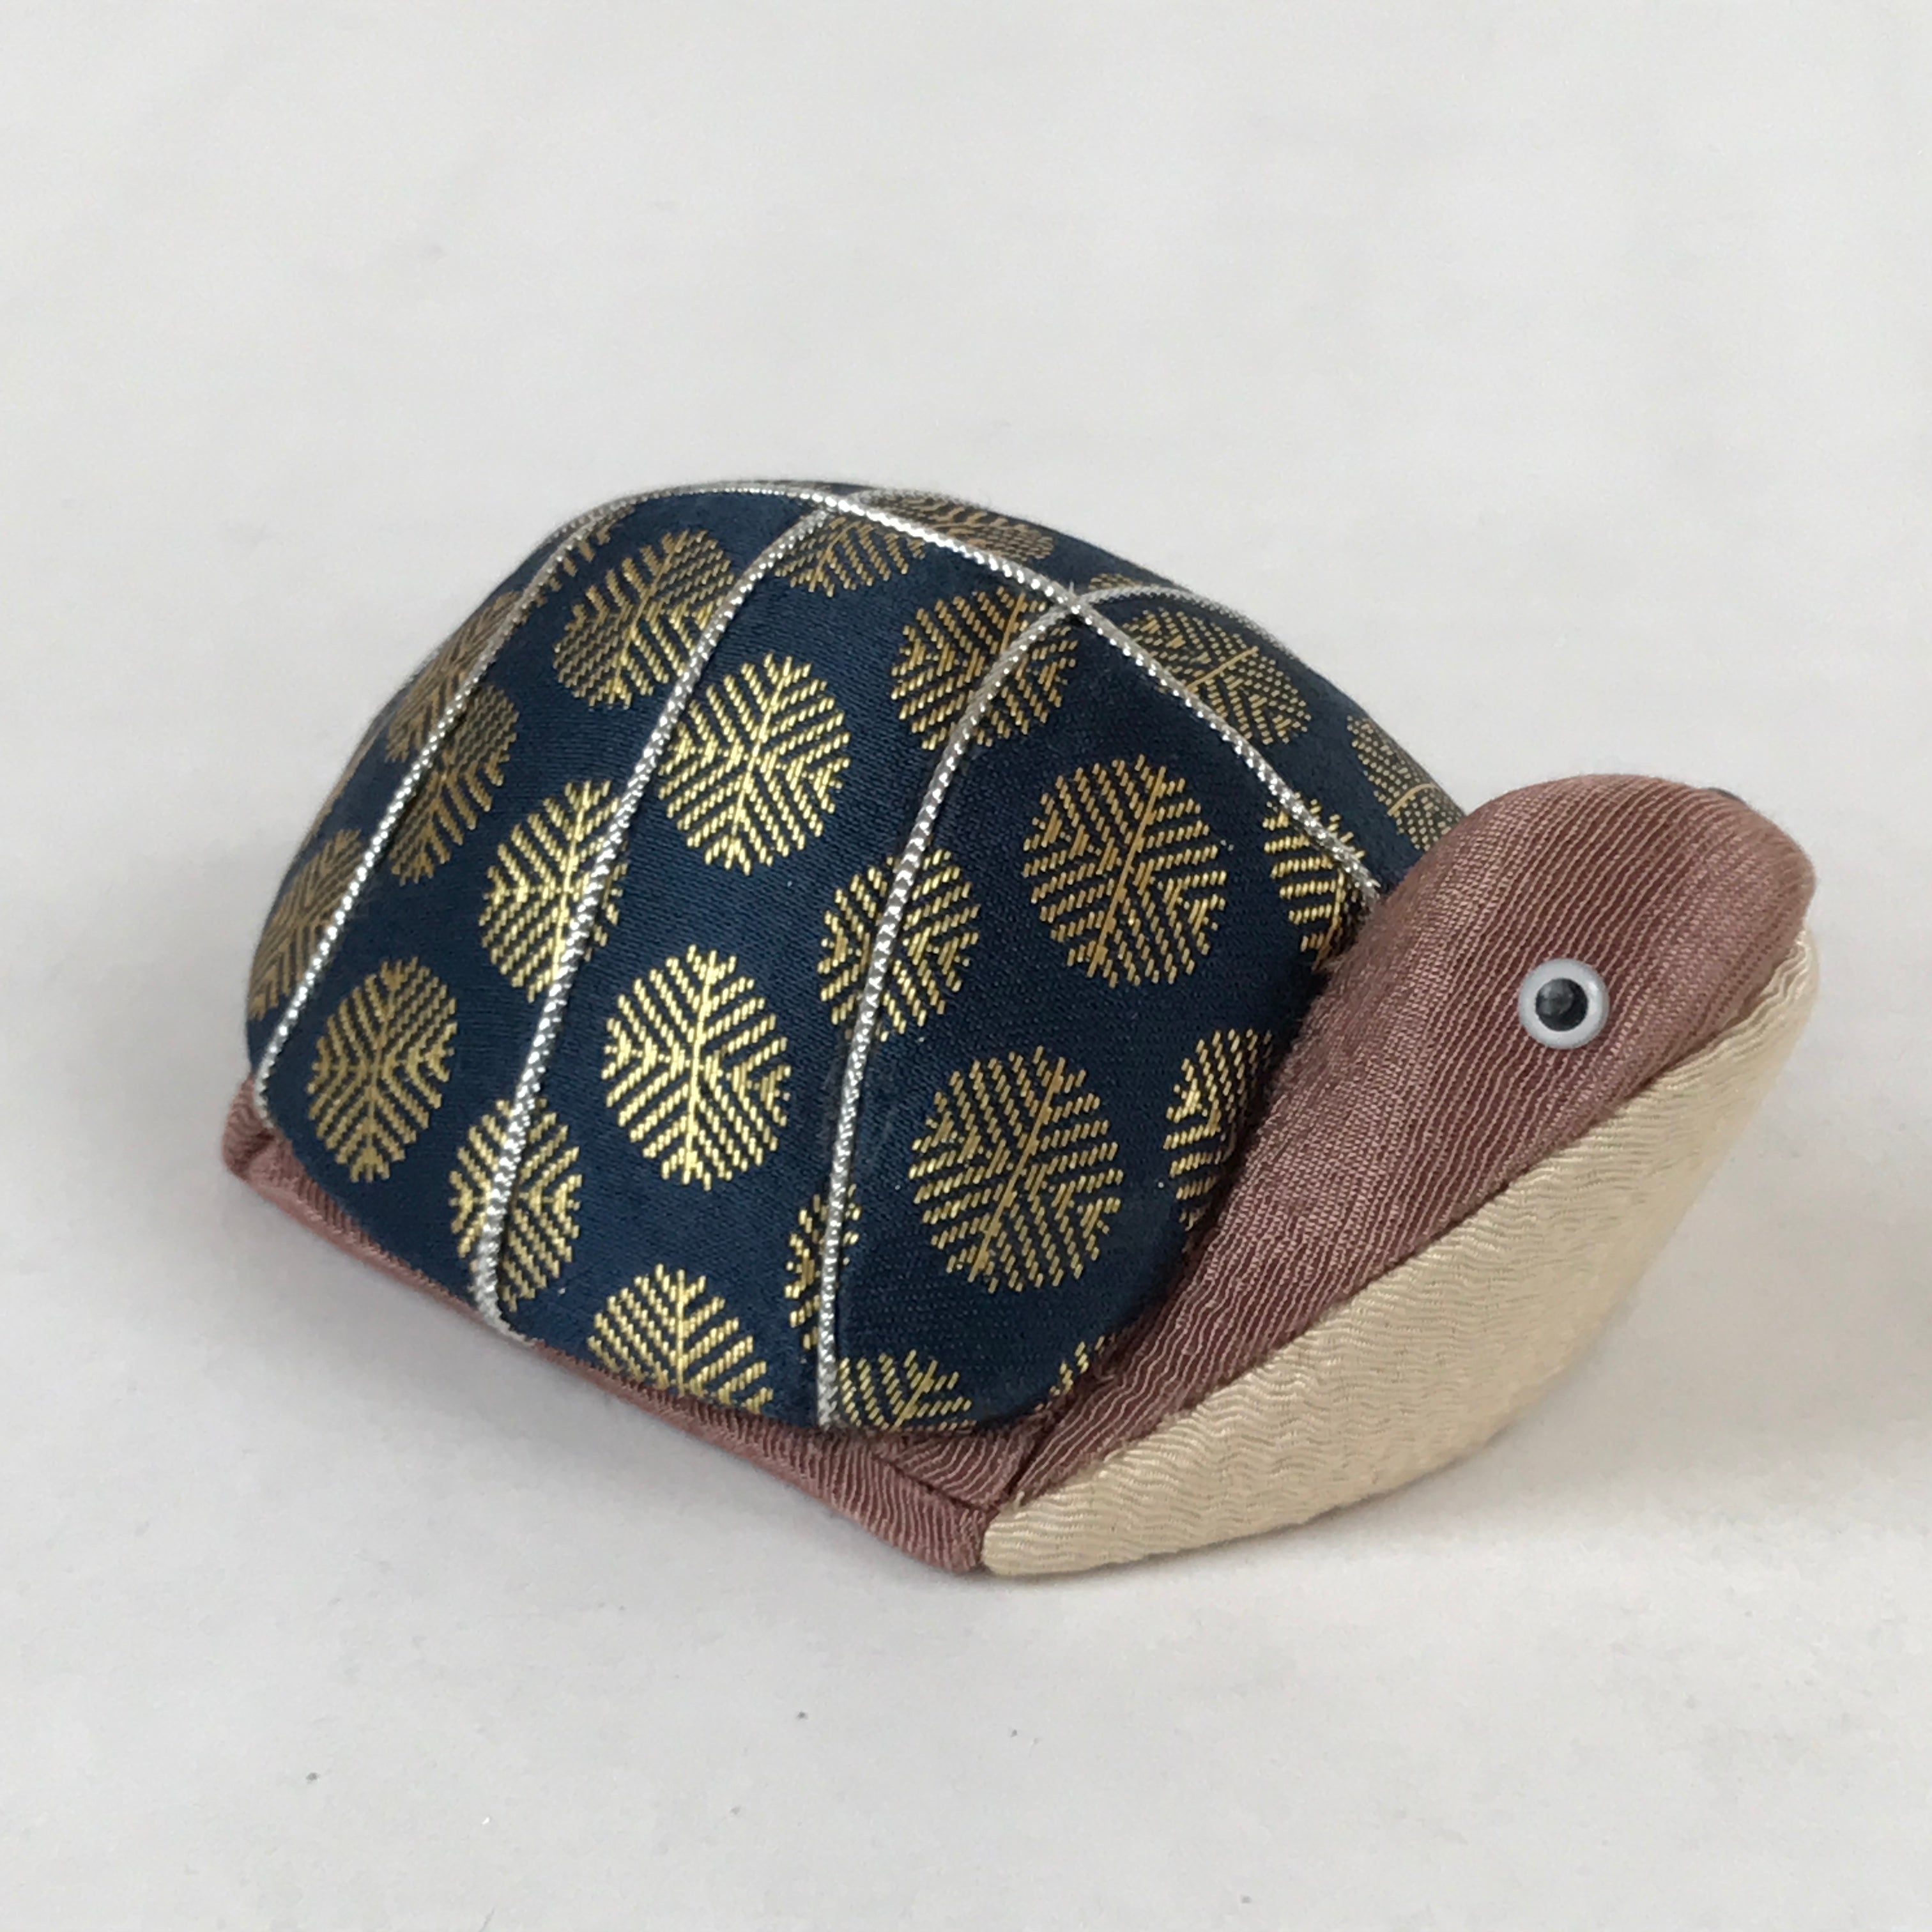 Japanese Silk Fabric Turtle Kame Doll Vtg Chirimen Zaiku Traditional Craft BD959